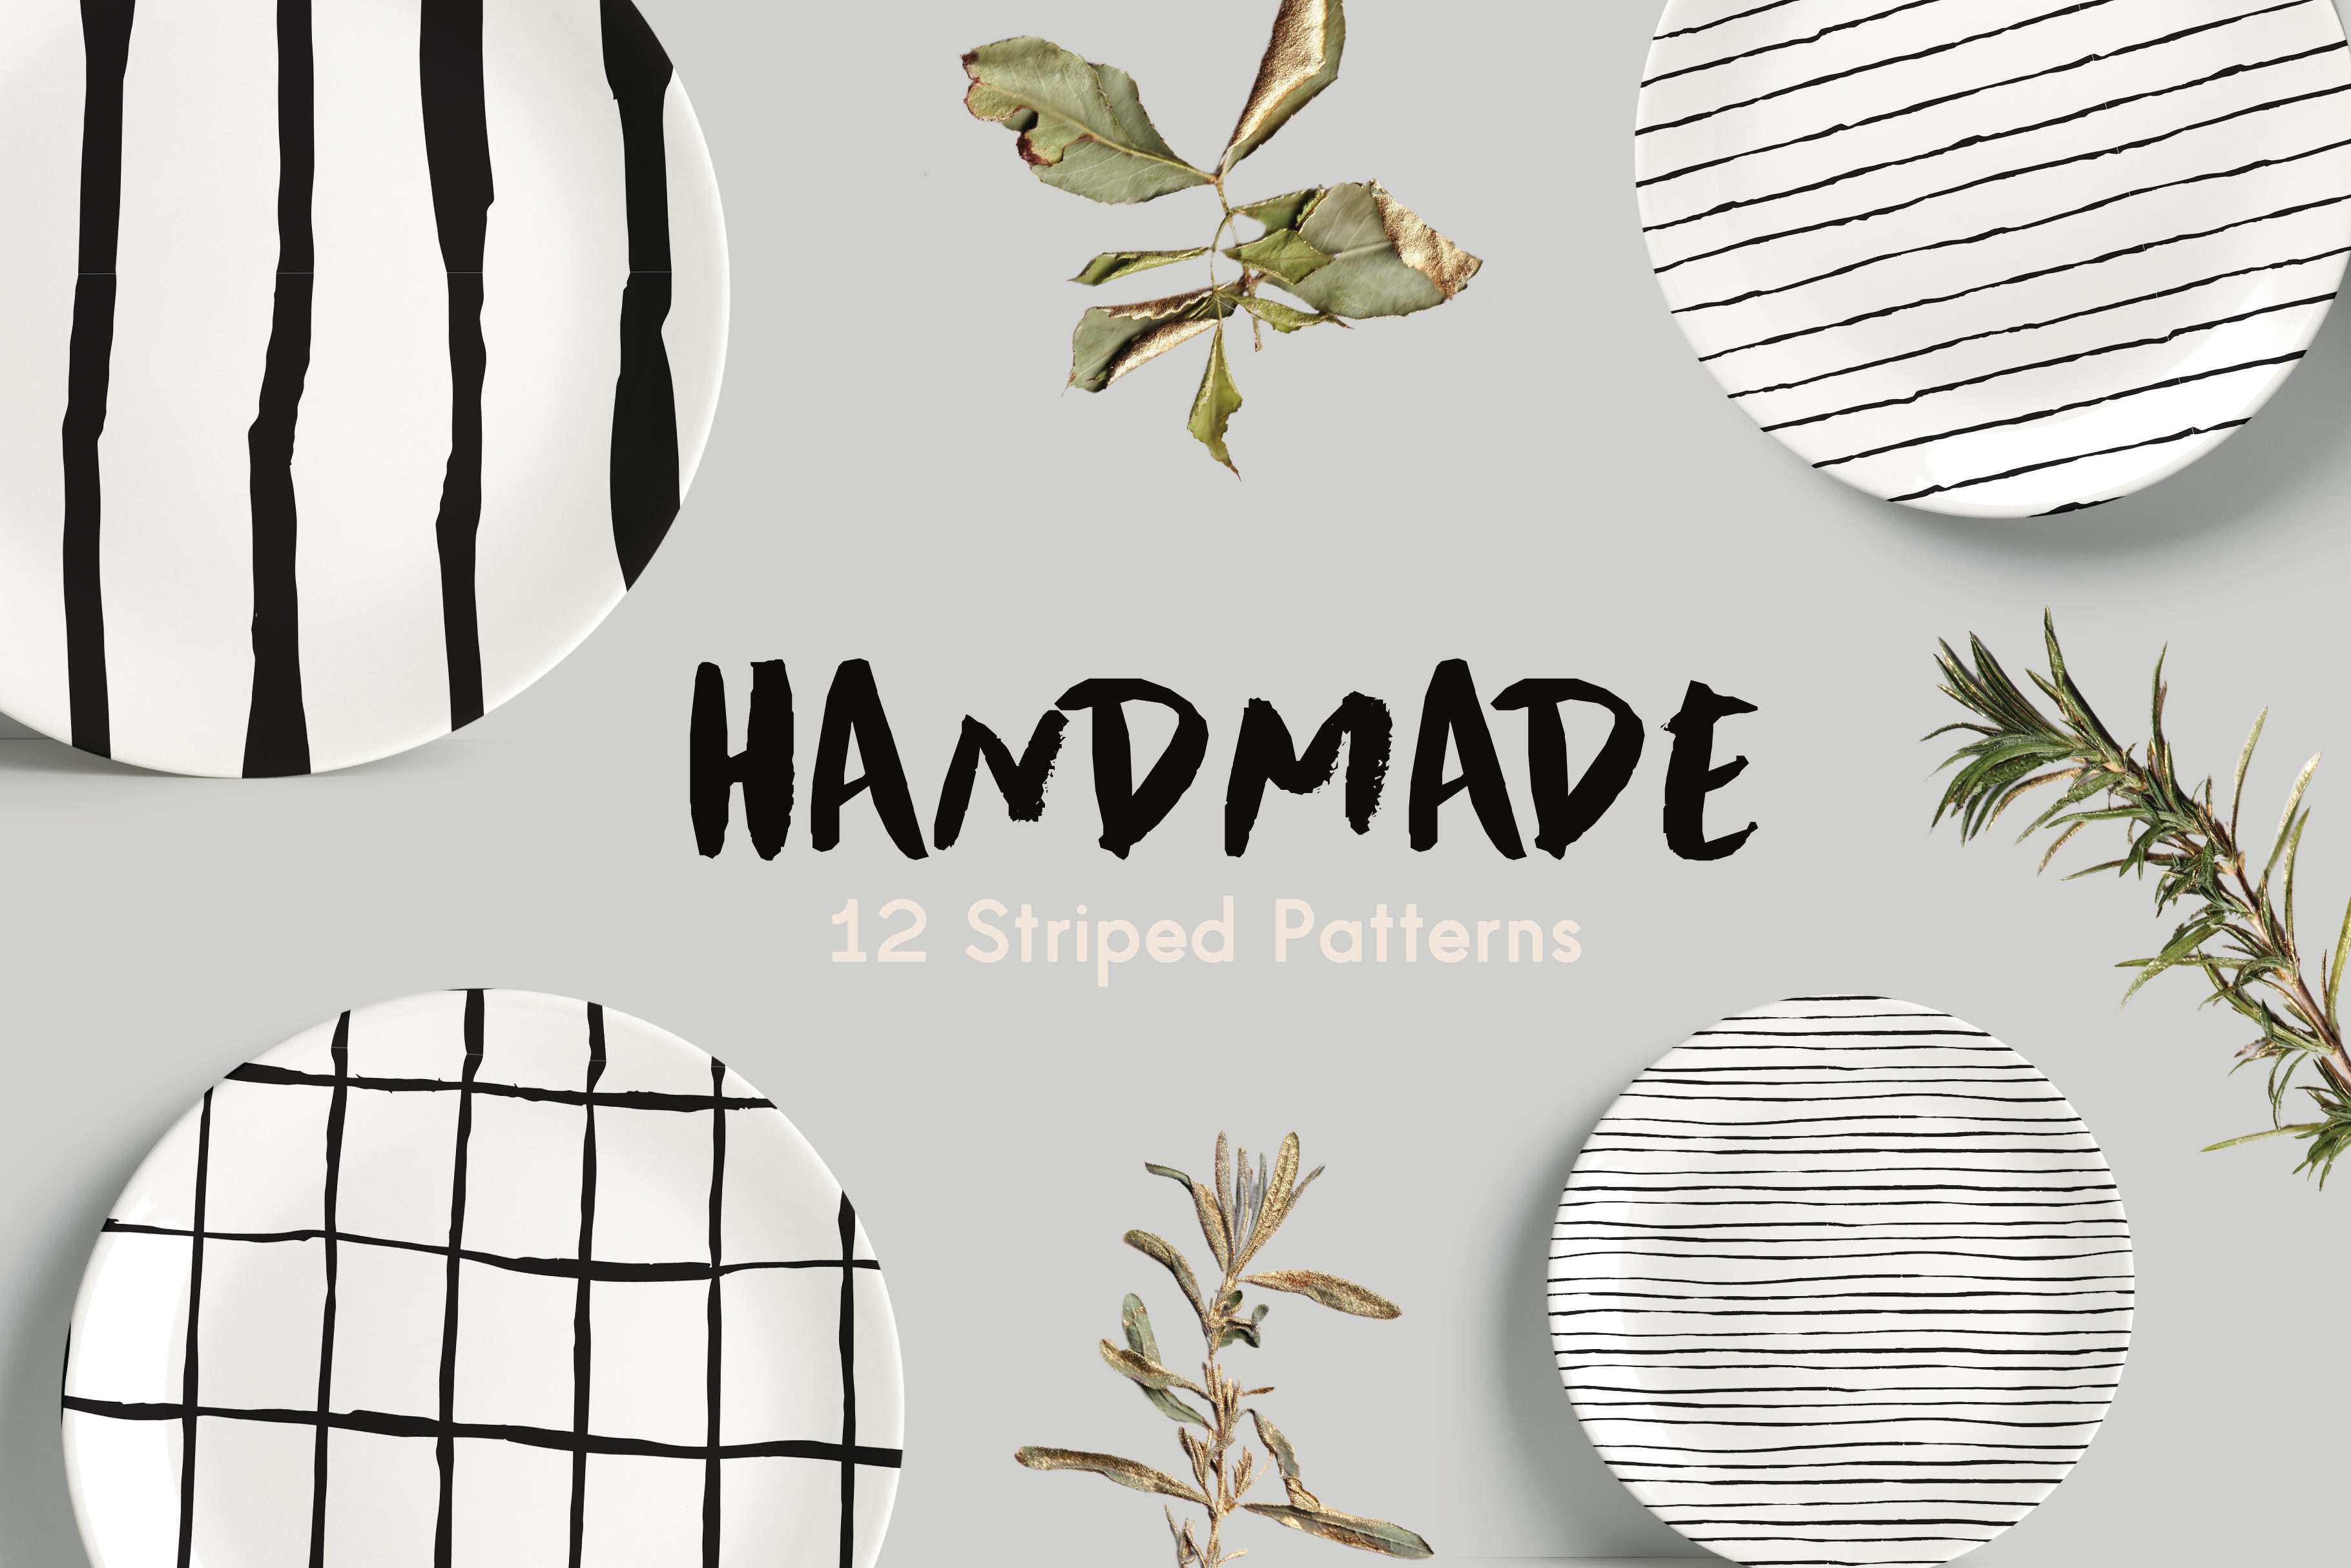 Handmade Striped Patterns